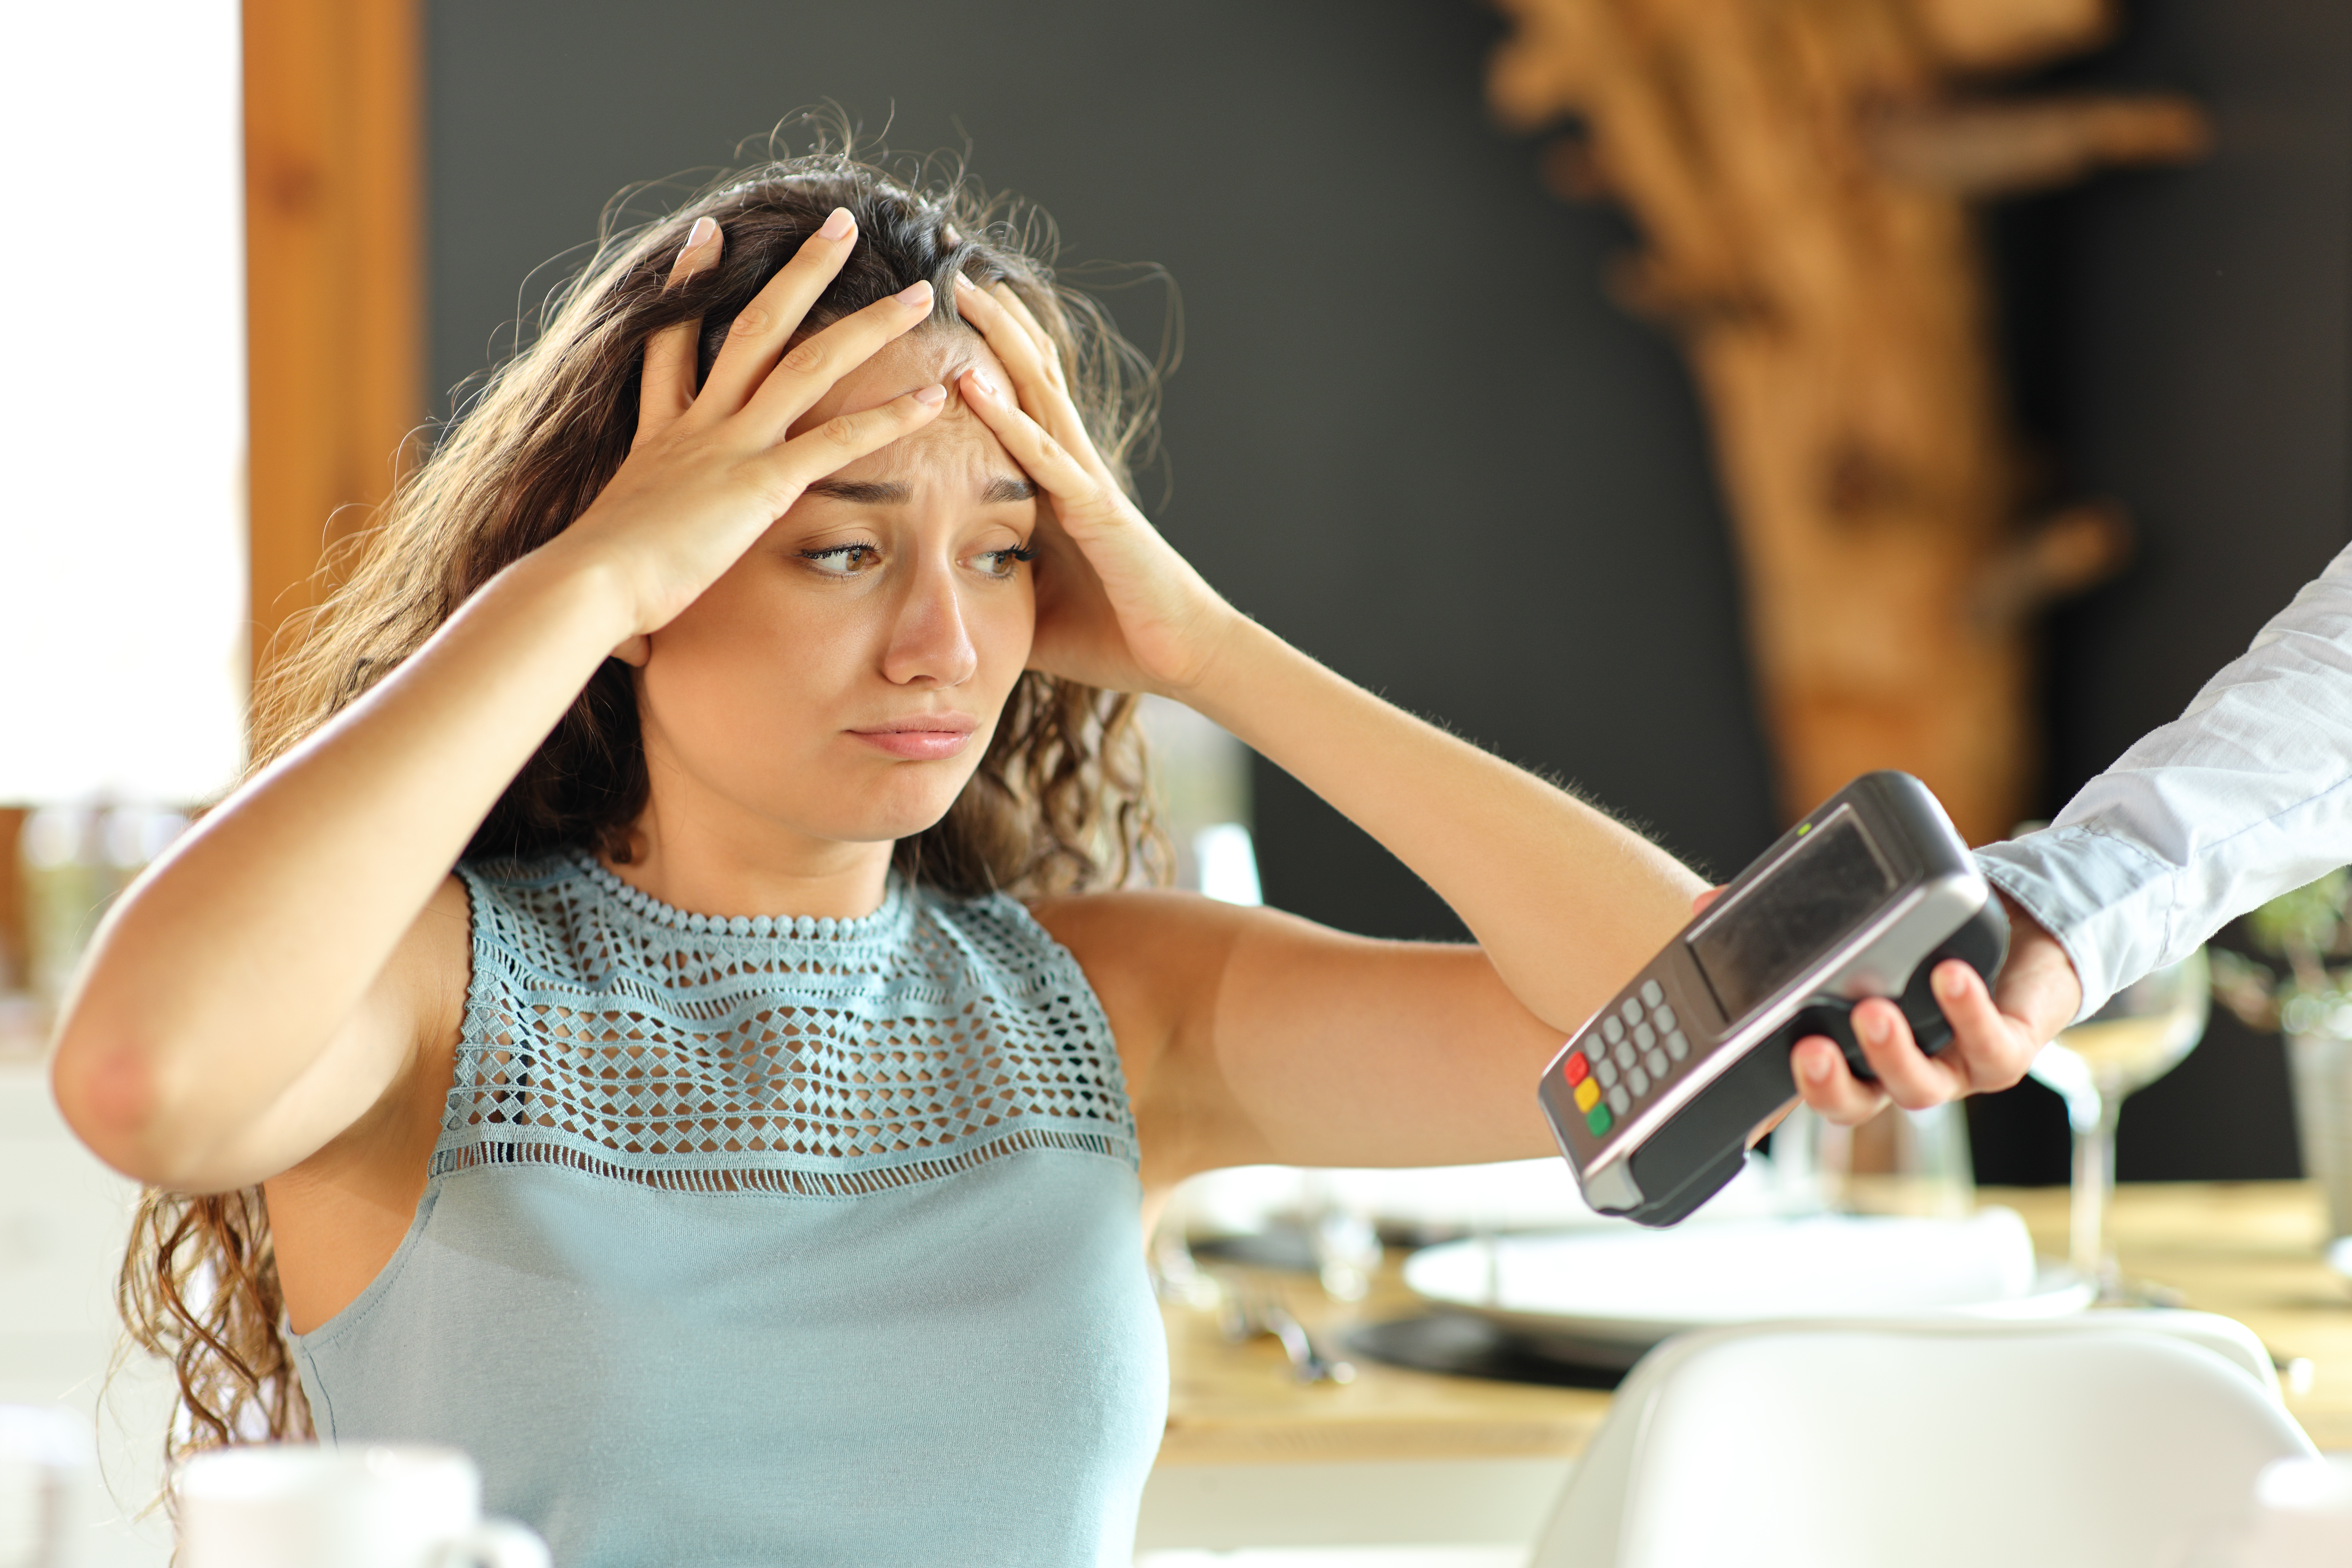 A woman complains about expensive restaurant bill | Source: Shutterstock